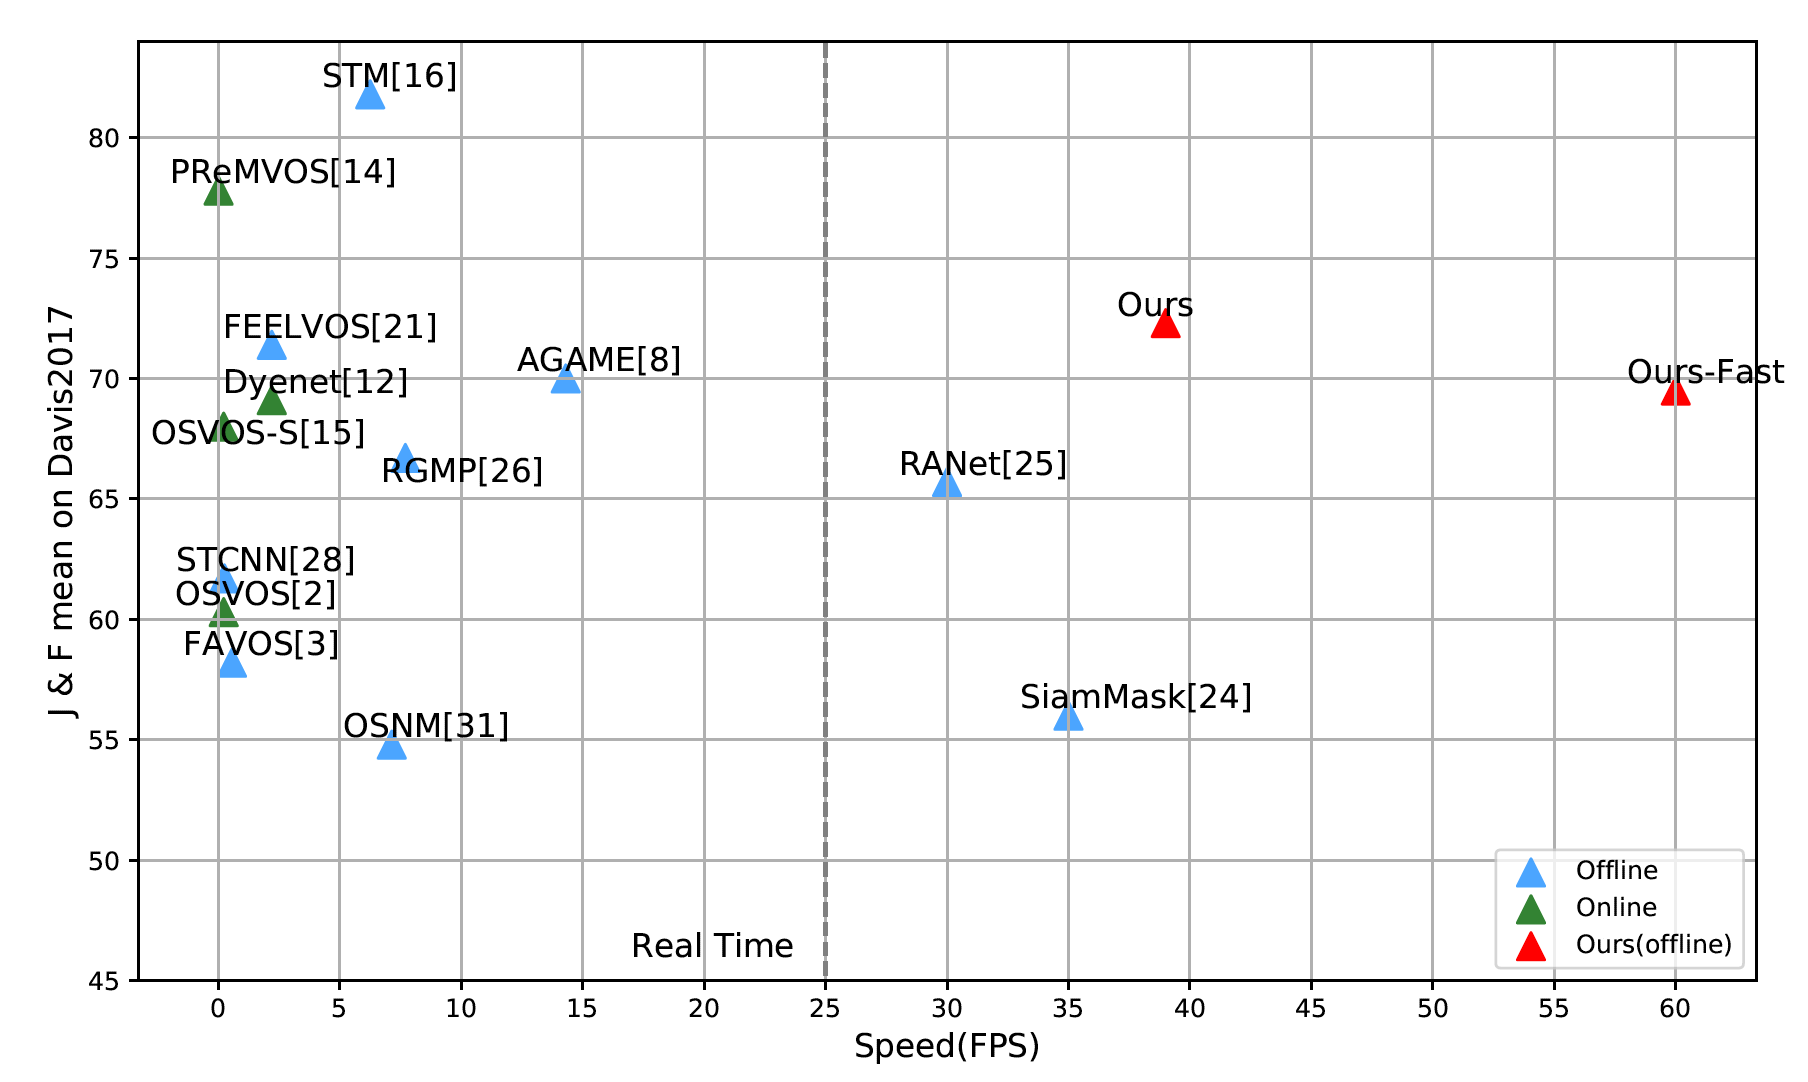 Accuracy versus speed on DAVIS2017-Val dataset